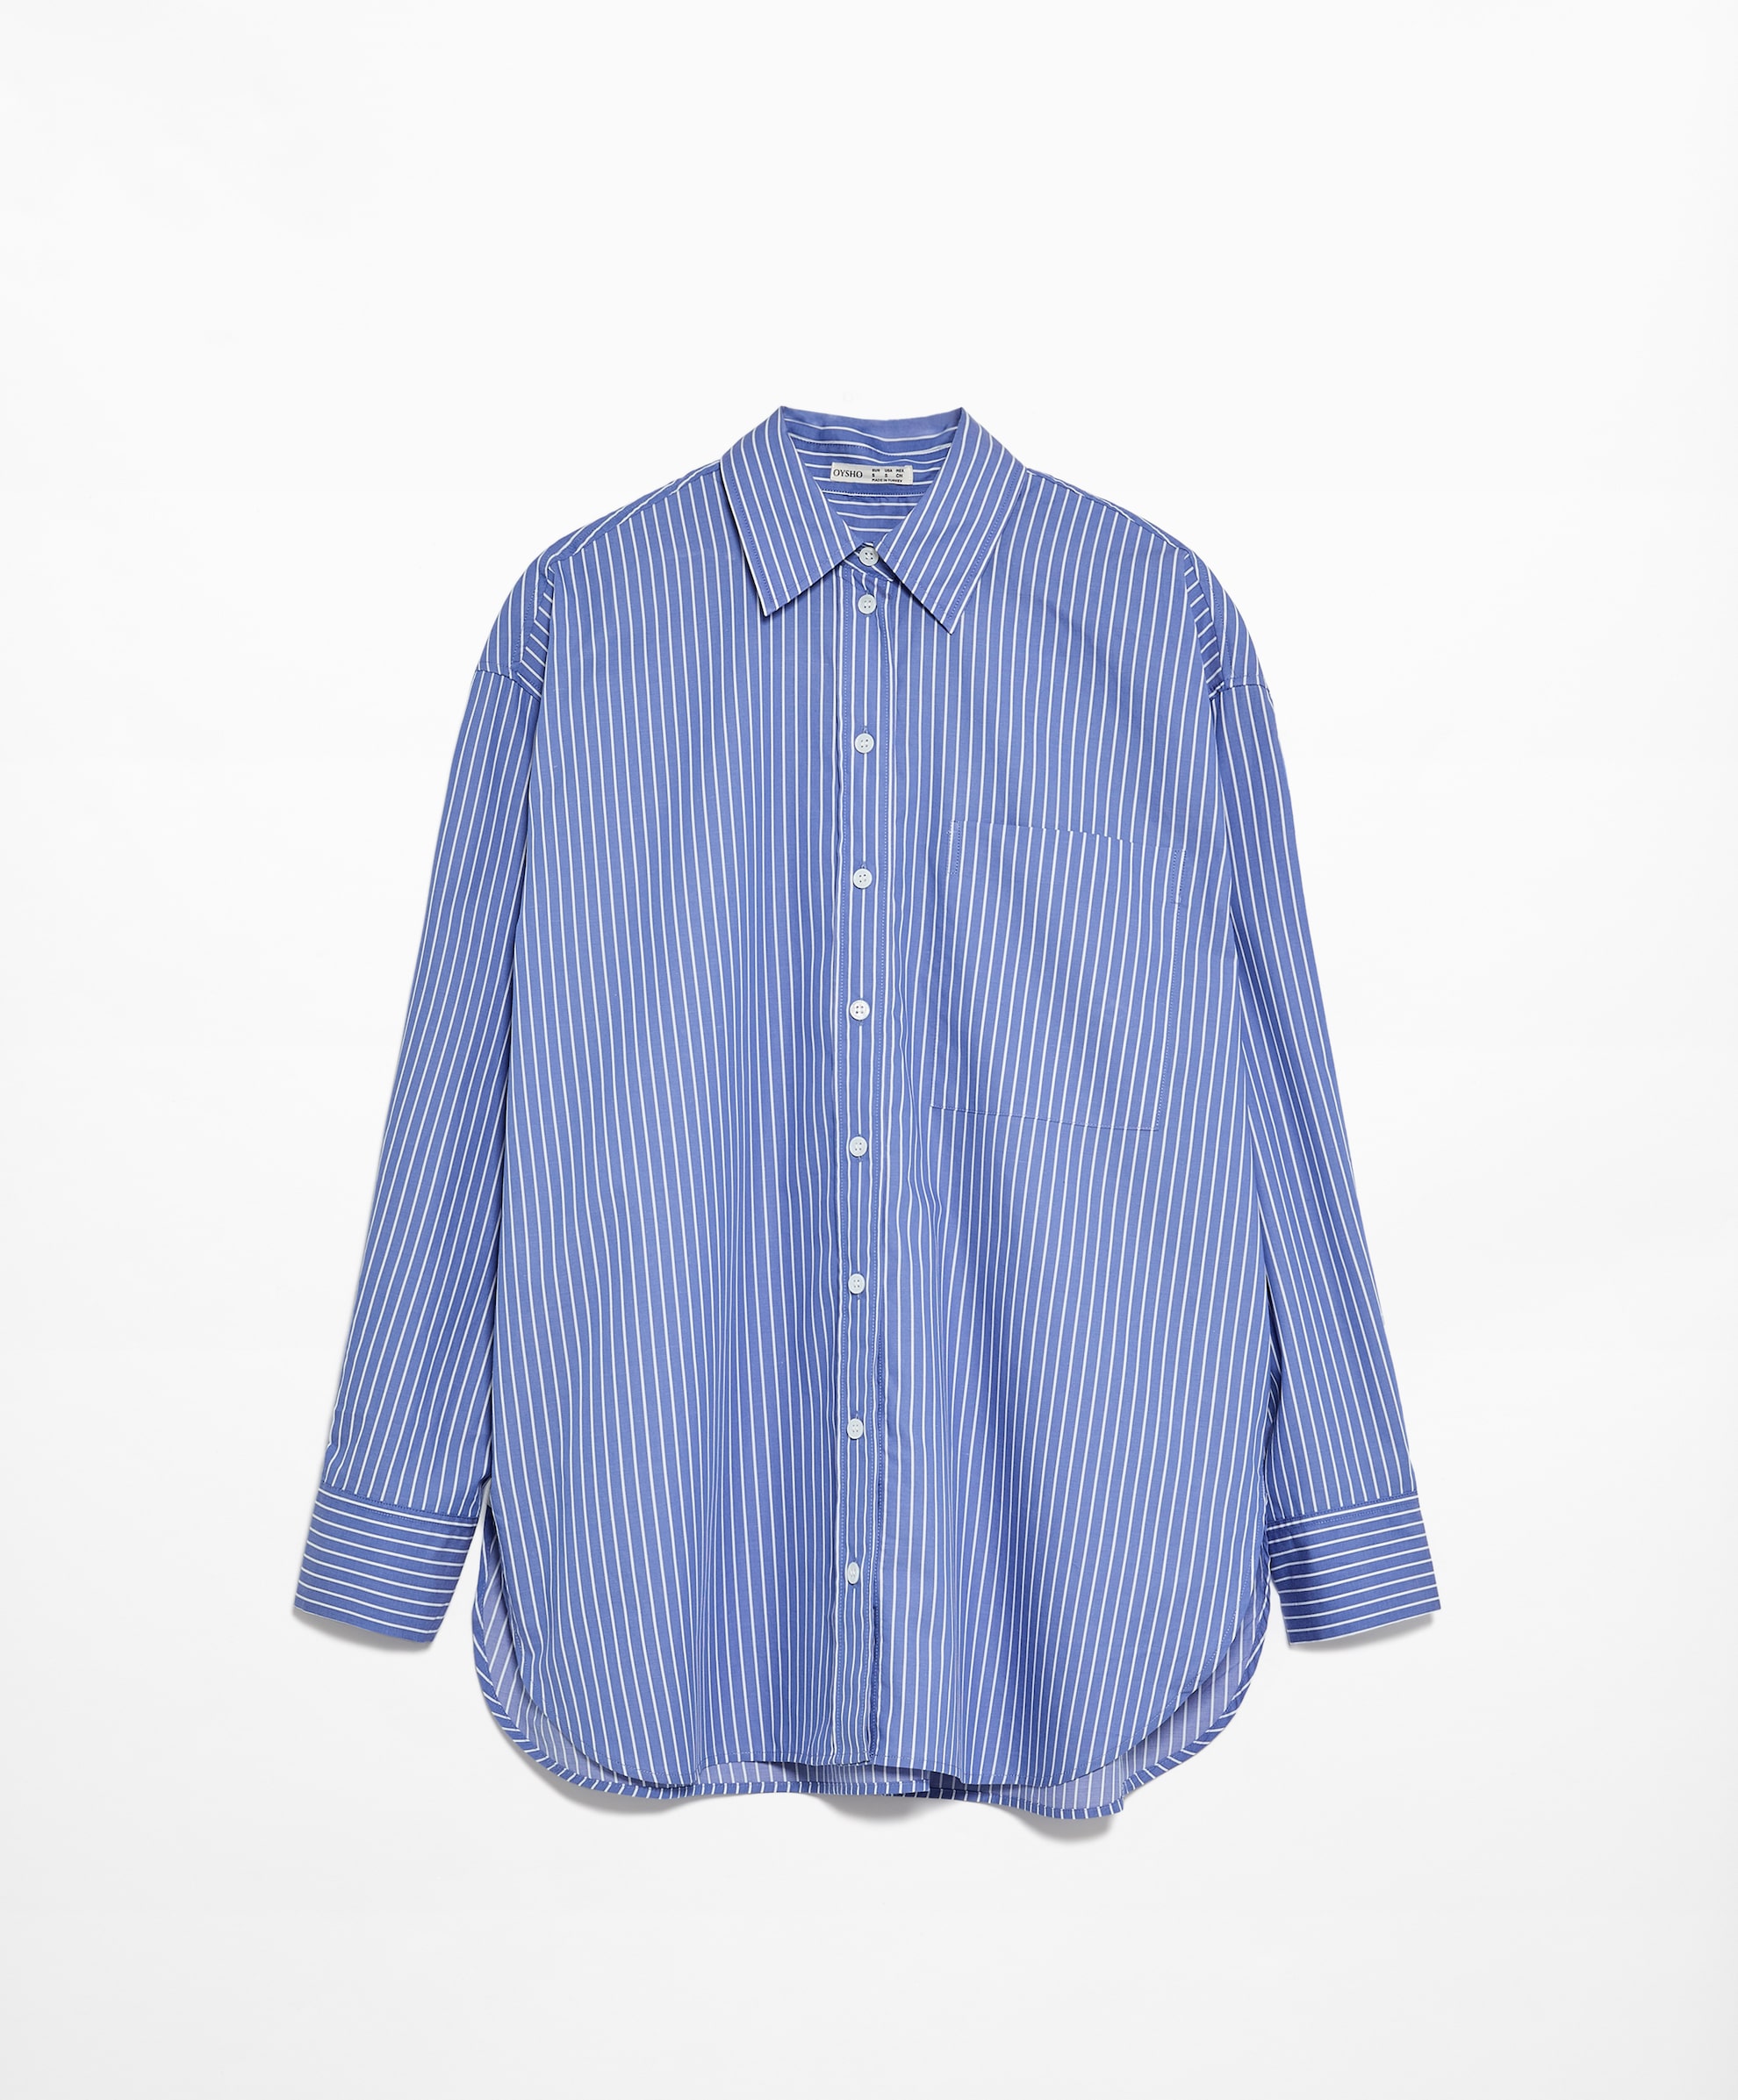 Рубашка Oysho Striped 100% Cotton Long-sleeved, синий брюки oysho checked 100% cotton пыльно фиолетовый